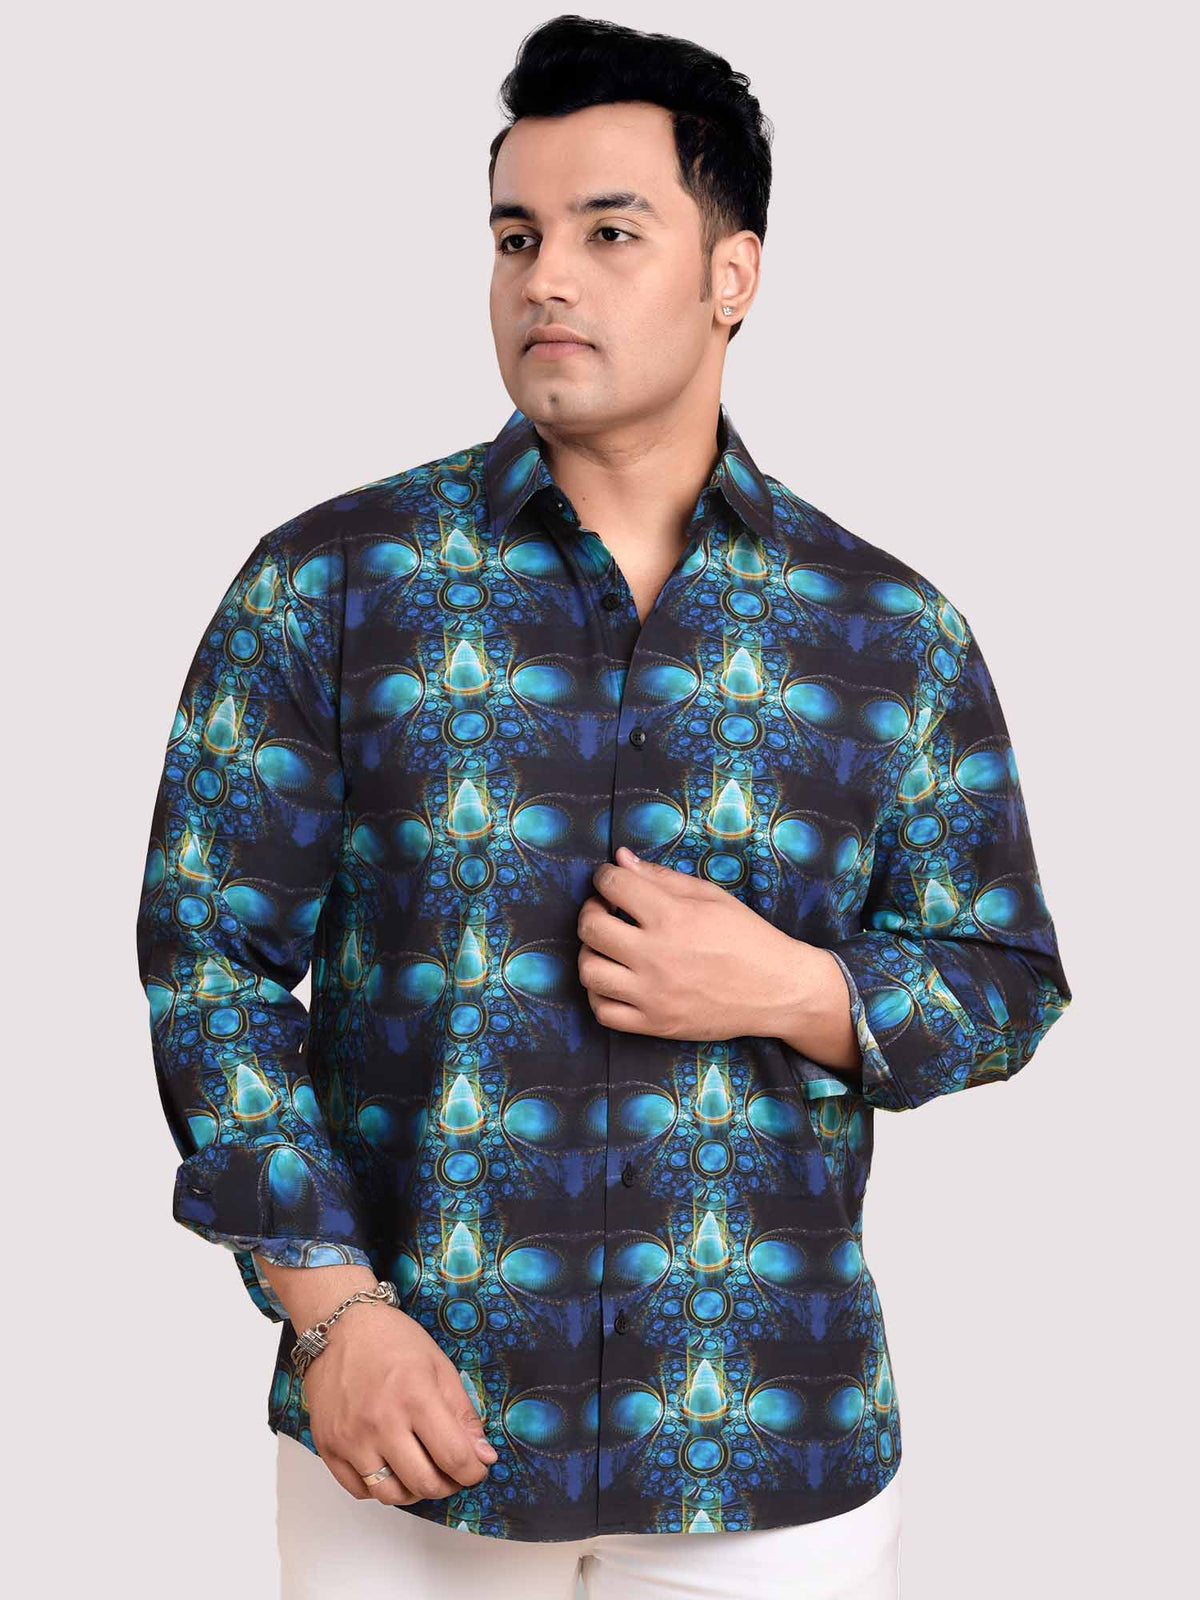 Opal Digital Printed Shirt Men's Plus Size